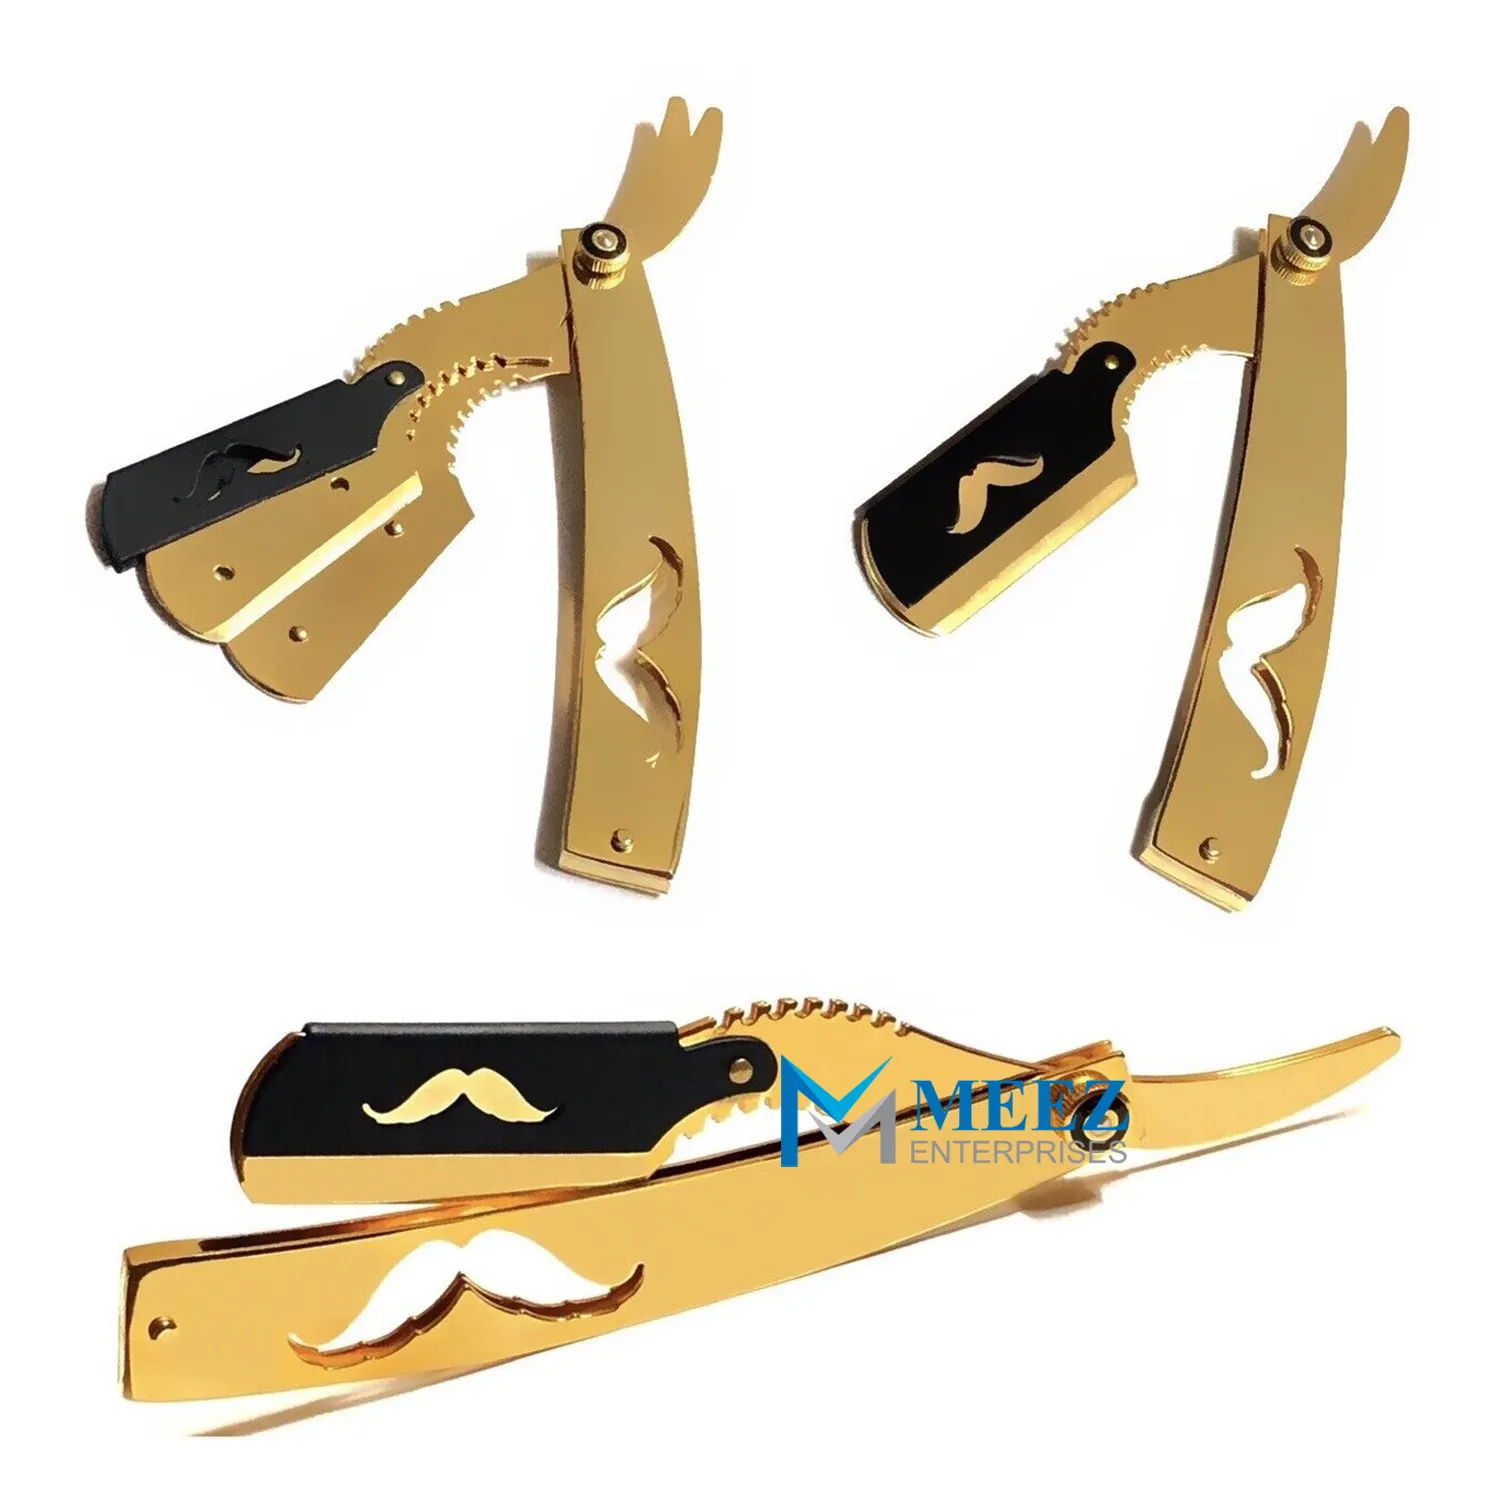 Gold Barber Salon Cut Throat Straight Razor Shaving Razor Knife Edge Free Blades Stainless Steel Tool